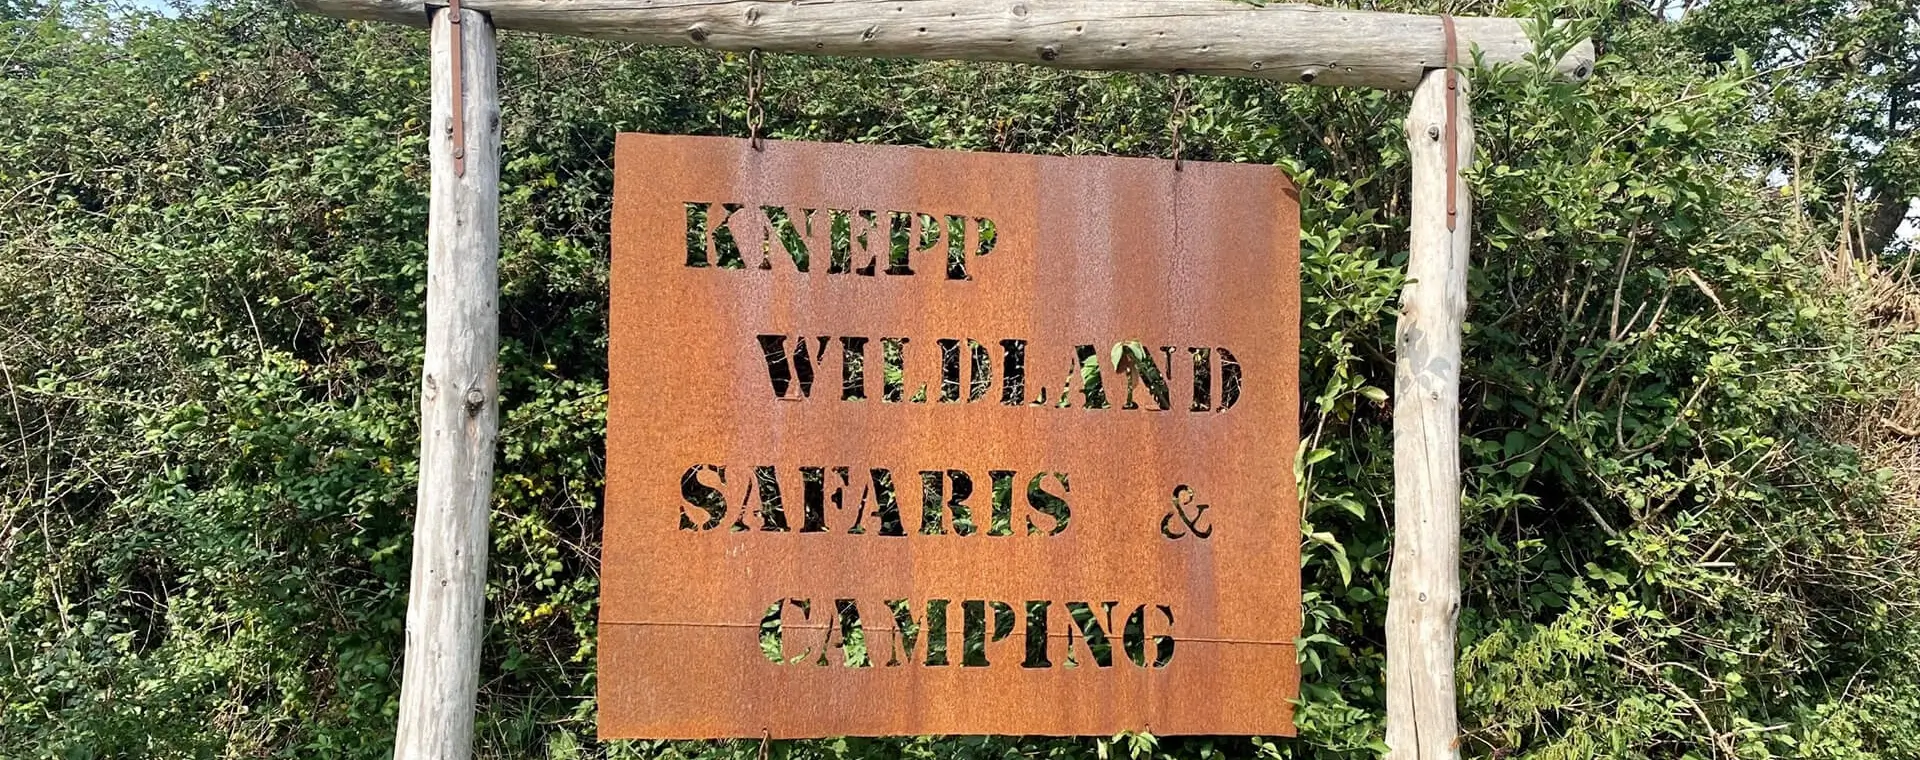 knepp estate sign - knepp wildland safaris and camping